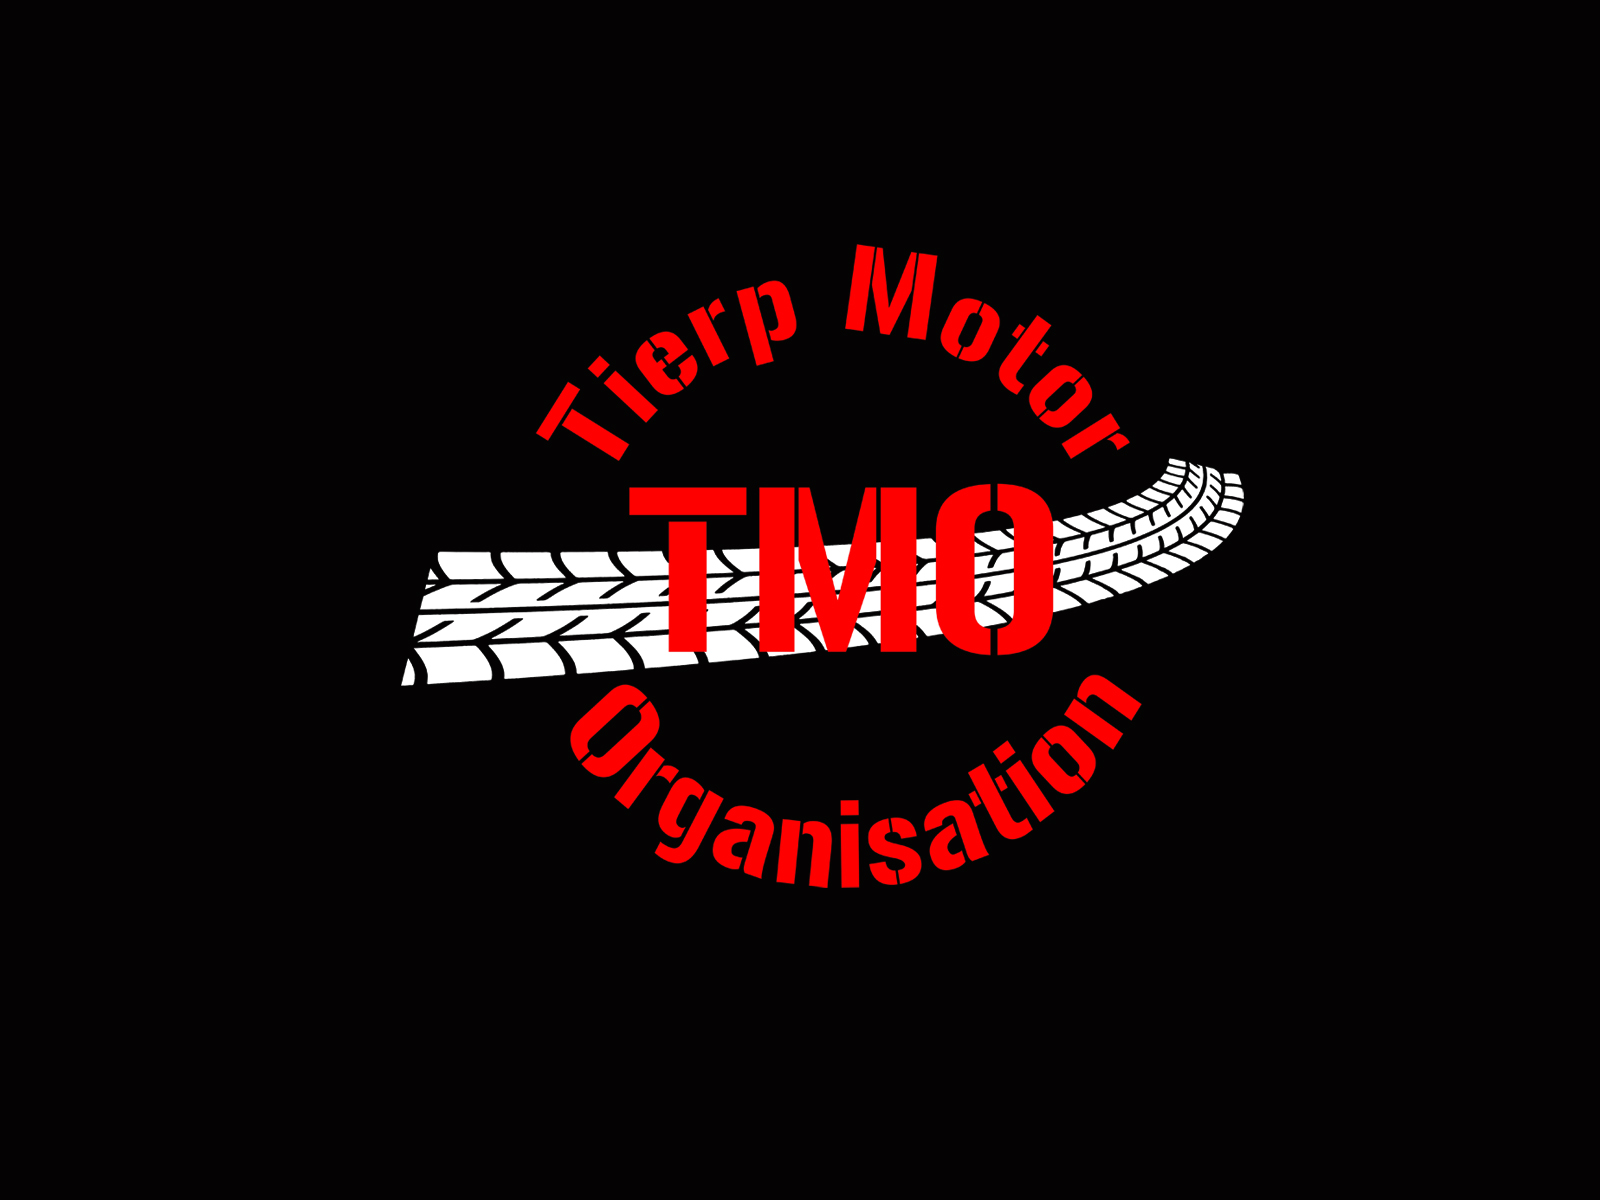 Tierp Motor Organisation